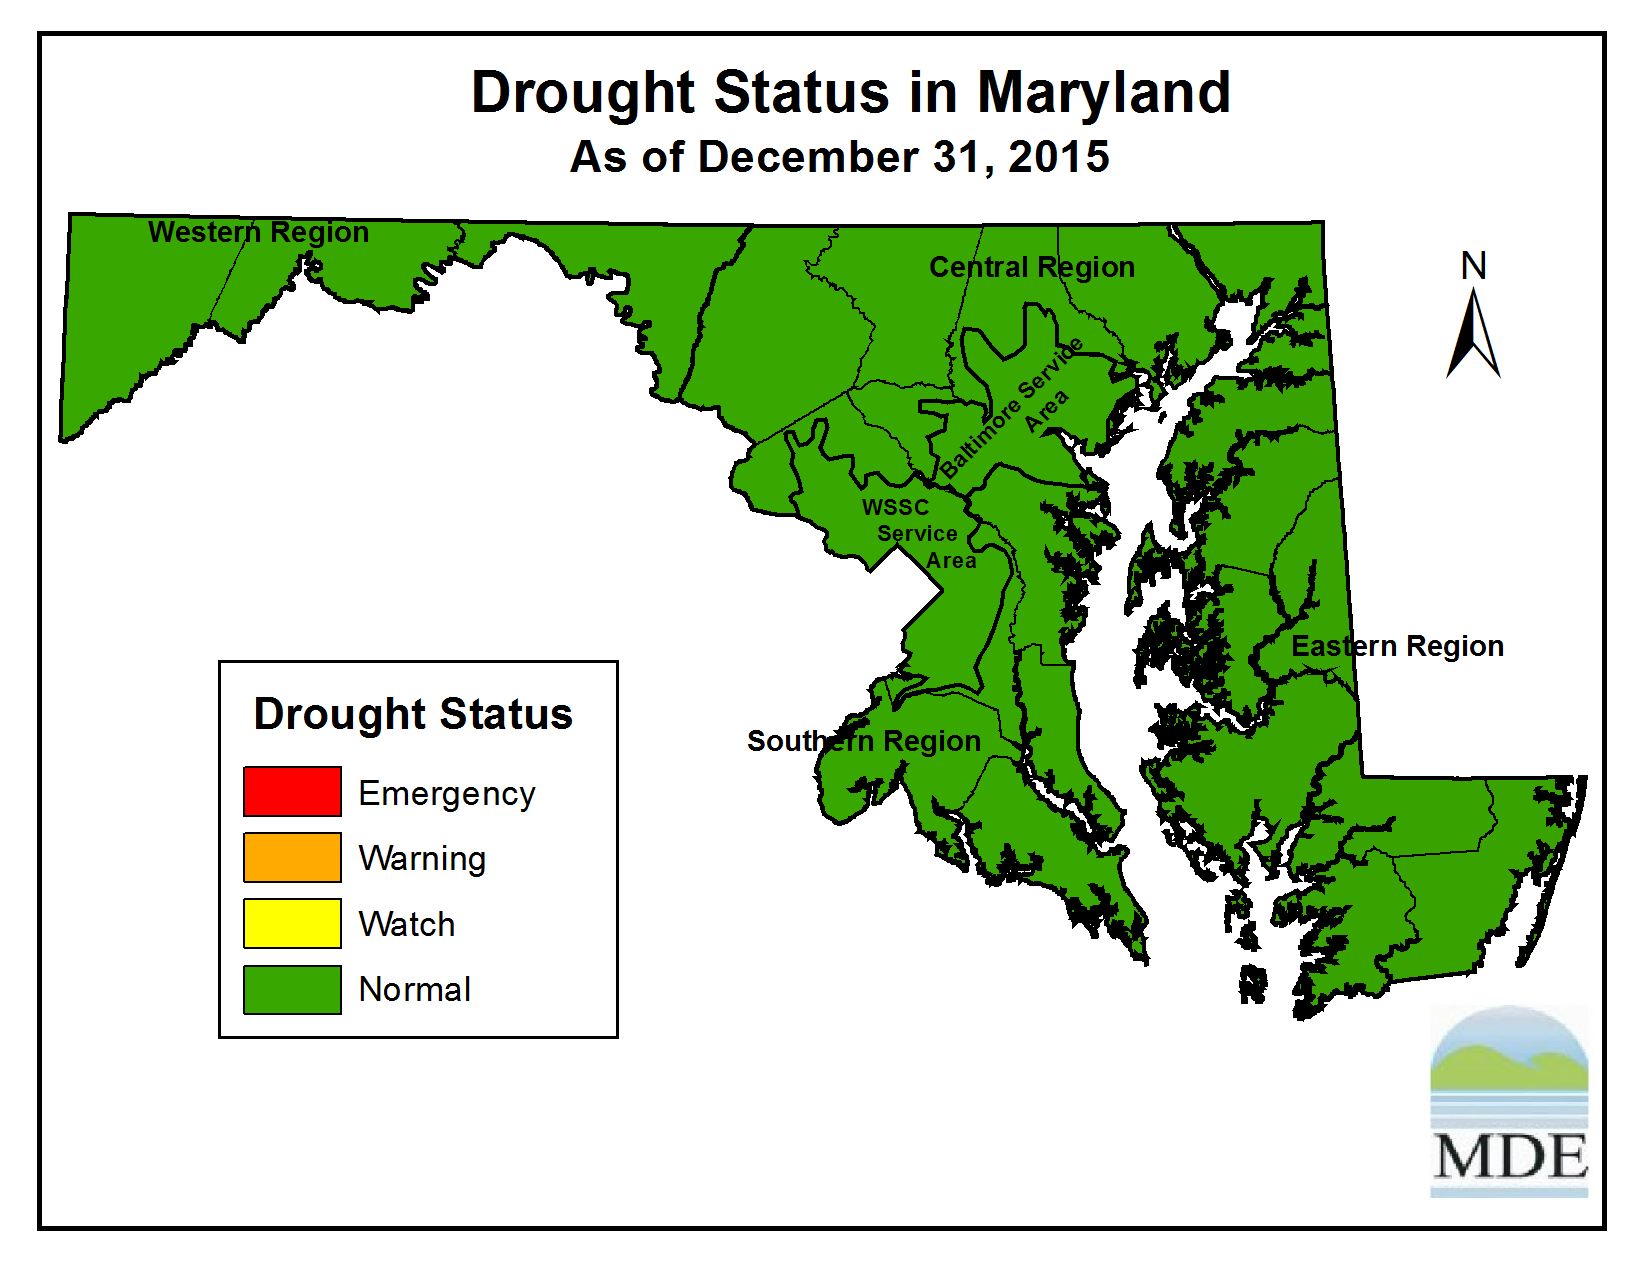 Drought Status as of December 31, 2015